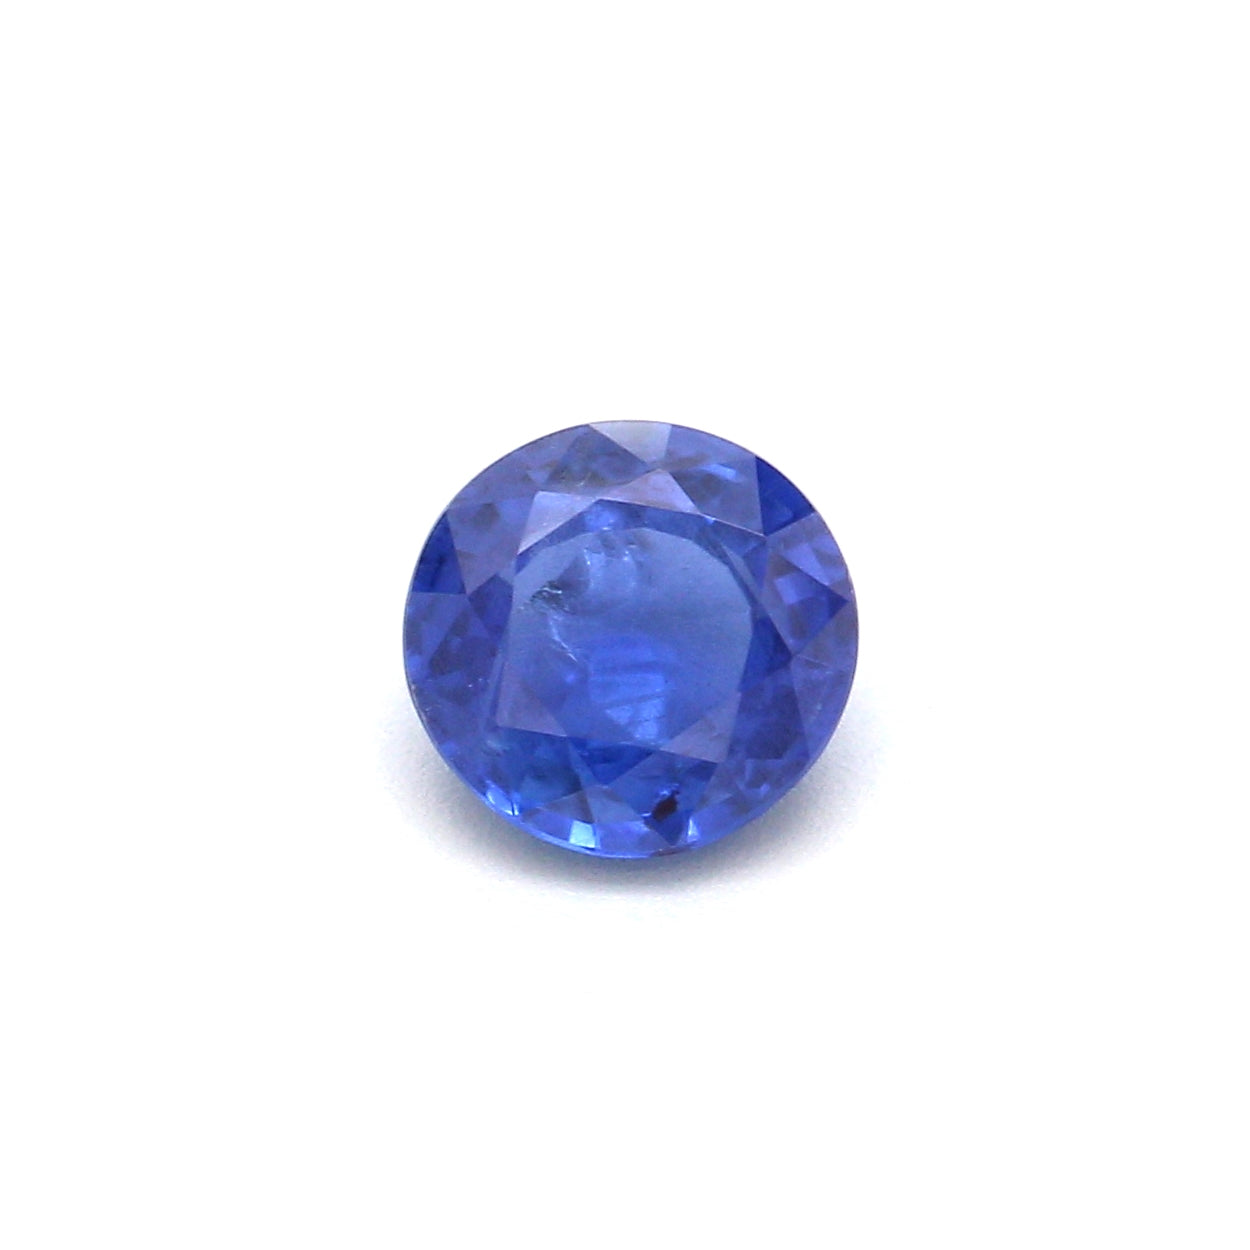 0.52ct Round Sapphire, Heated, Madagascar - 4.90 x 4.98 x 2.50mm